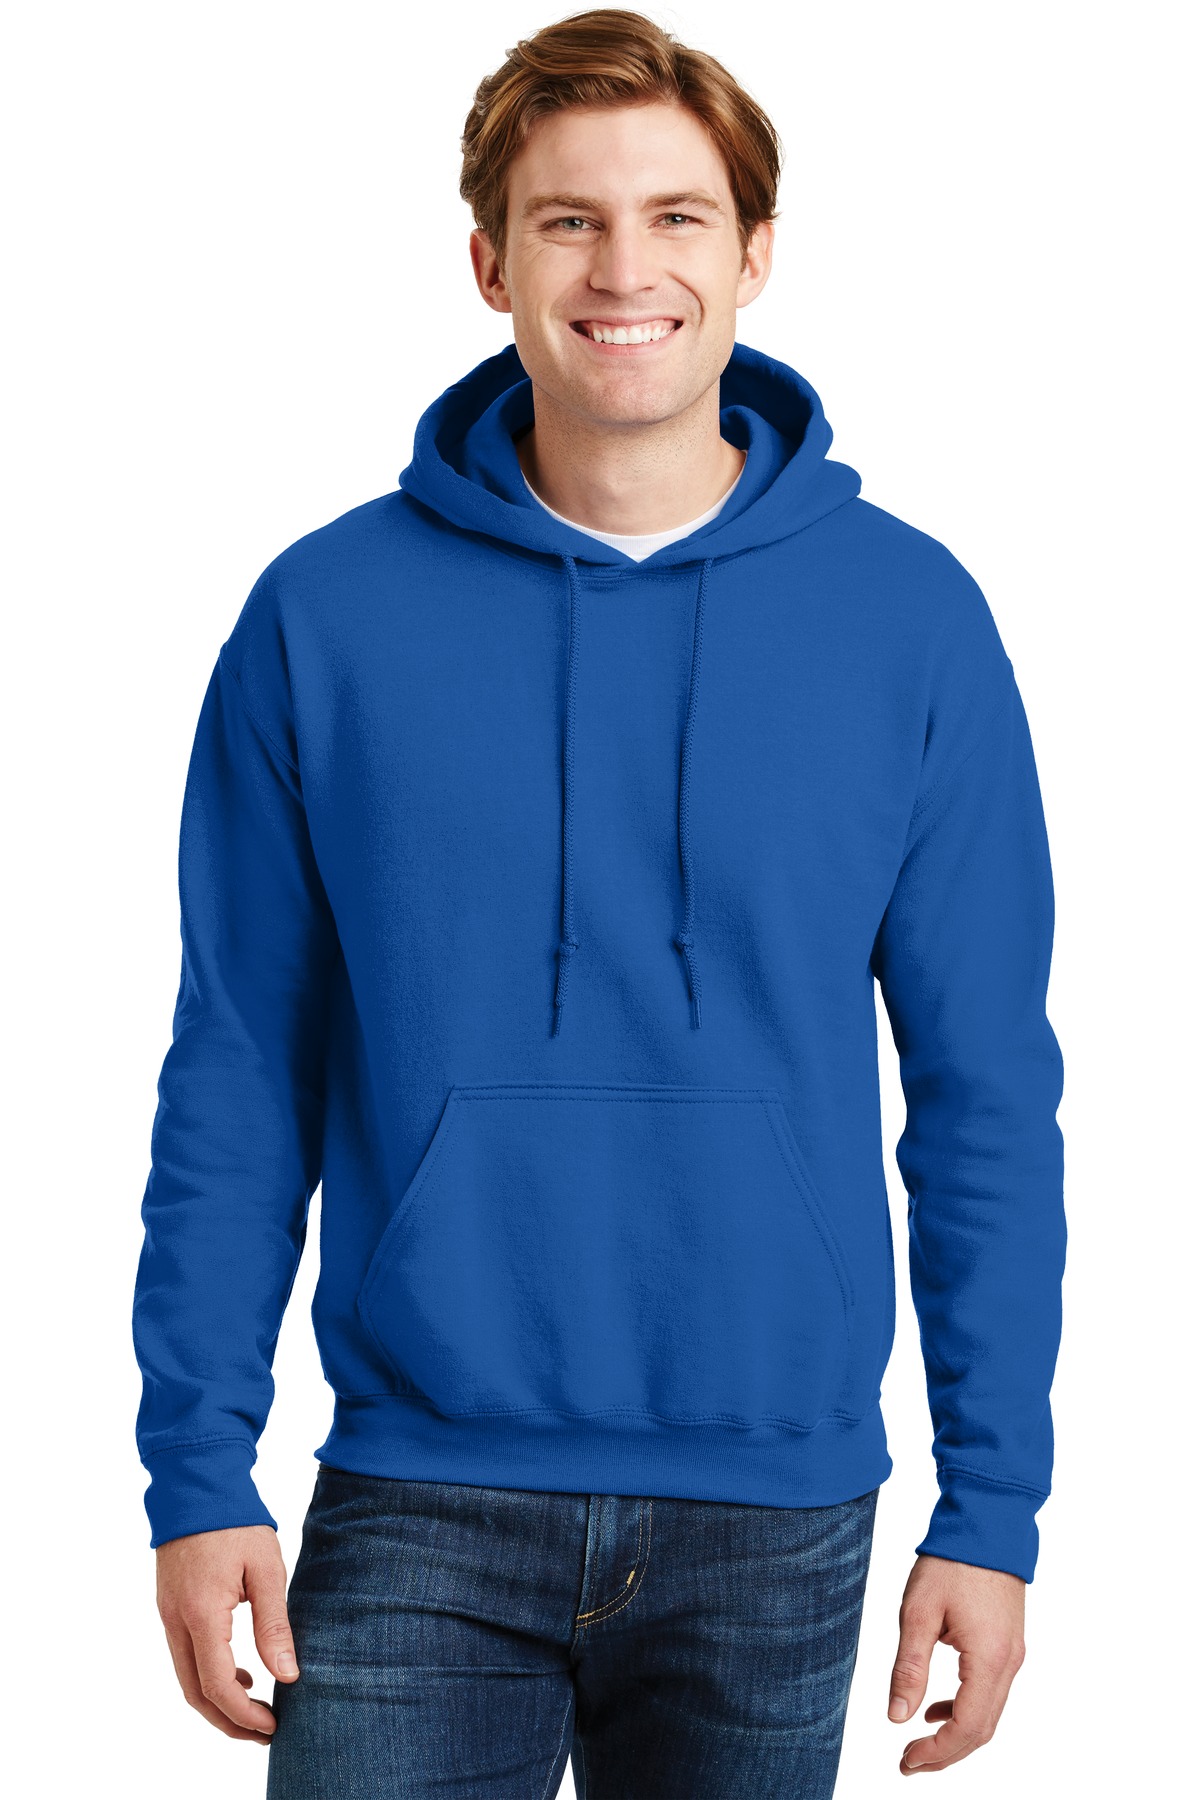 Gildan – DryBlend Pullover Hooded Sweatshirt. – Brighter Image